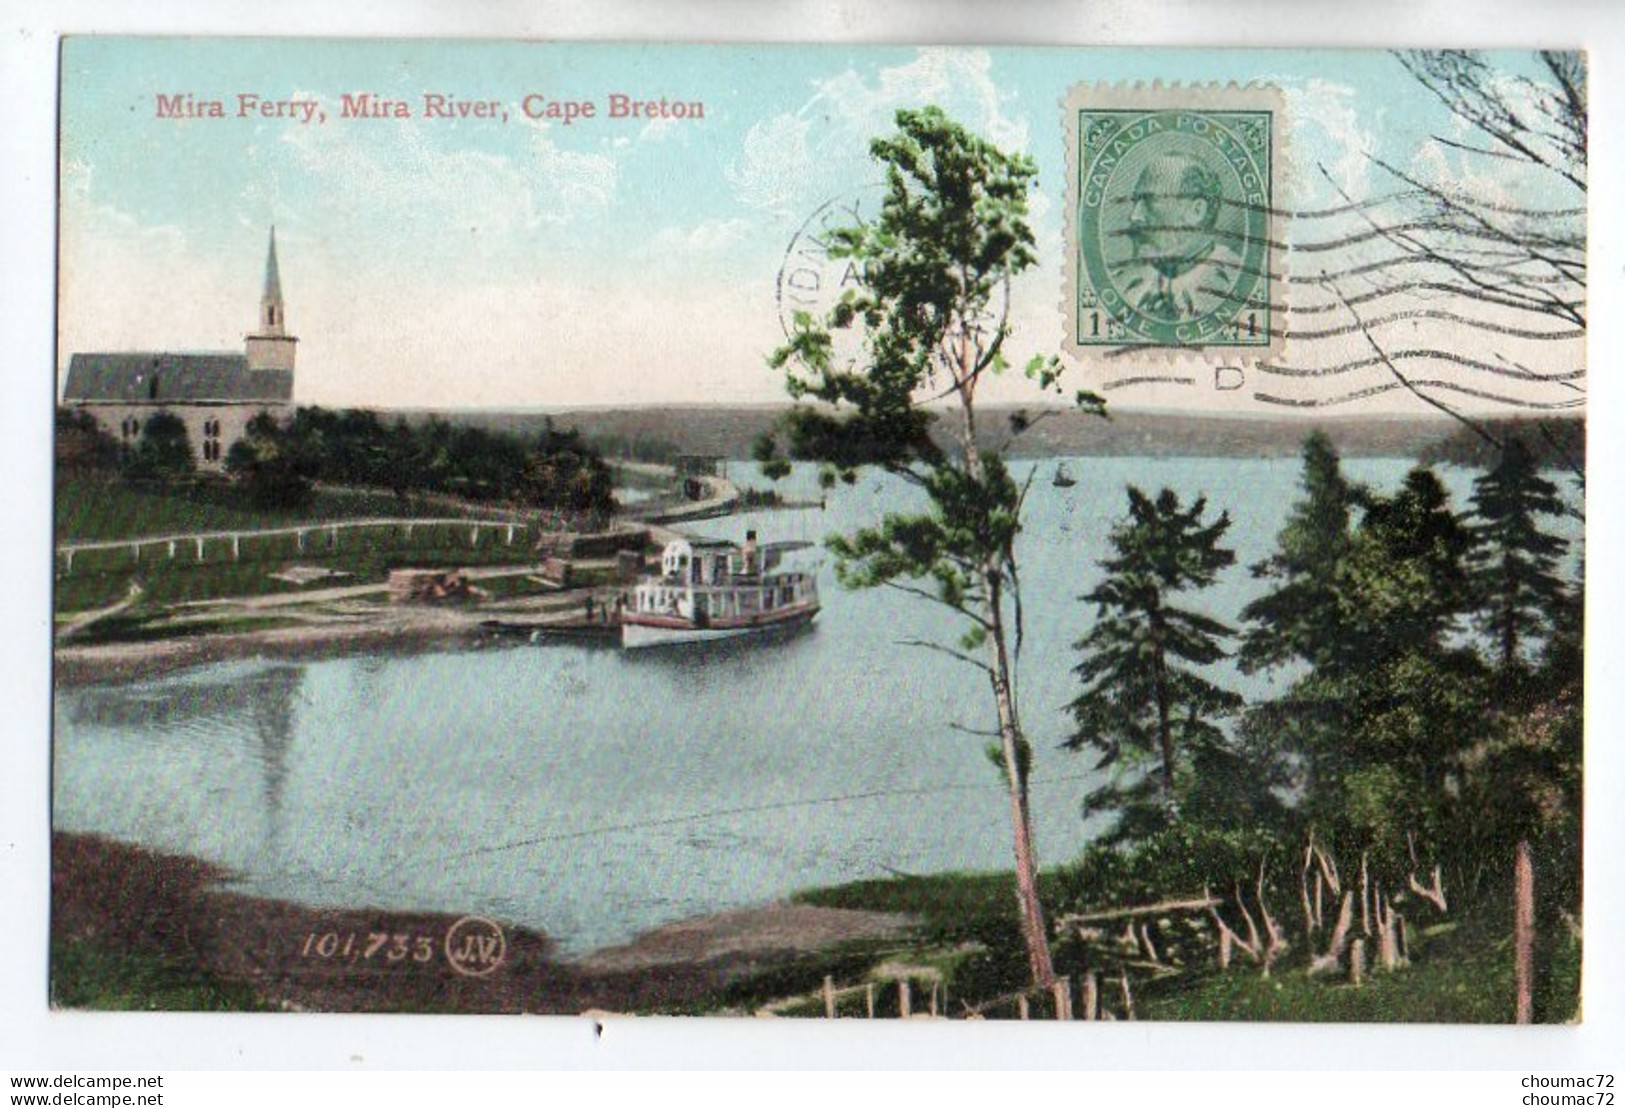 Canada Nova Scotia 002, Cape Breton, Albert M' Leod, Mira Ferry, Mira River - Cape Breton